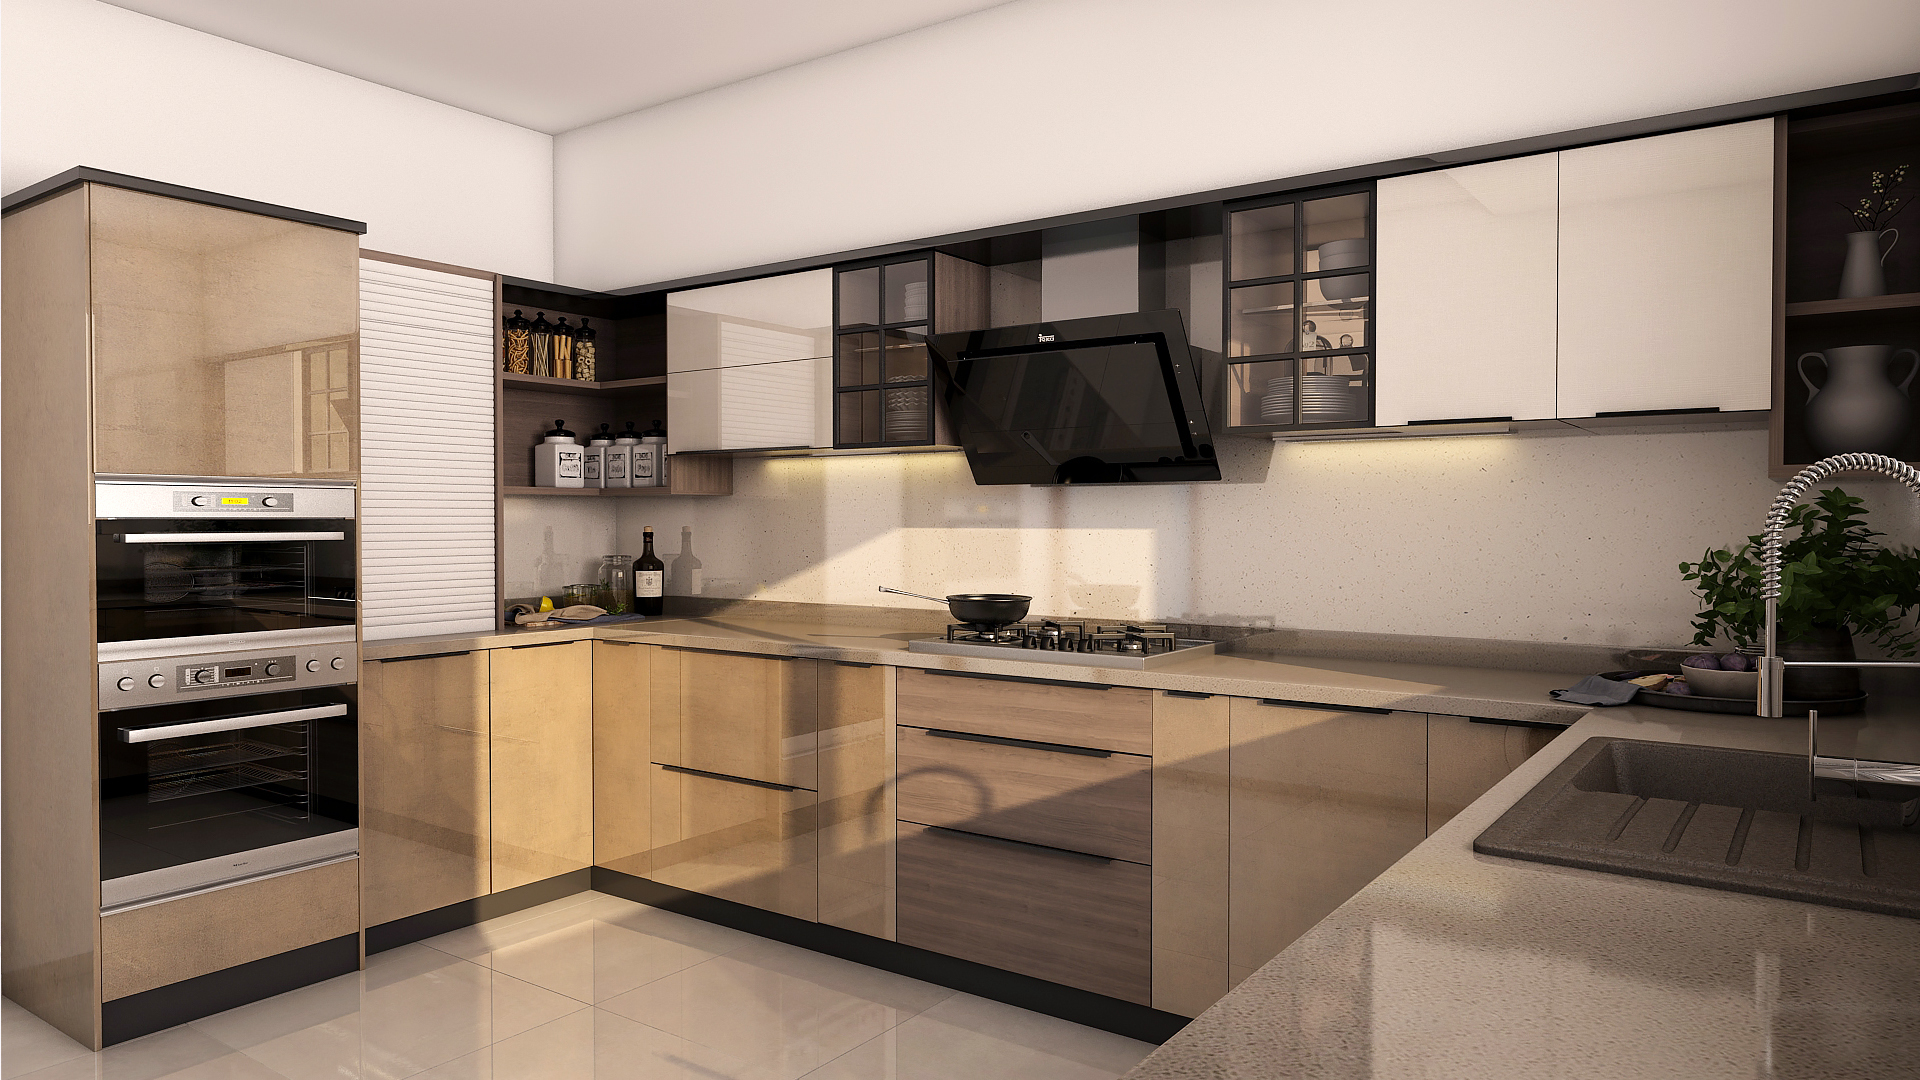 FabModula interior designer products U shaped modular kitchen with wooden panel